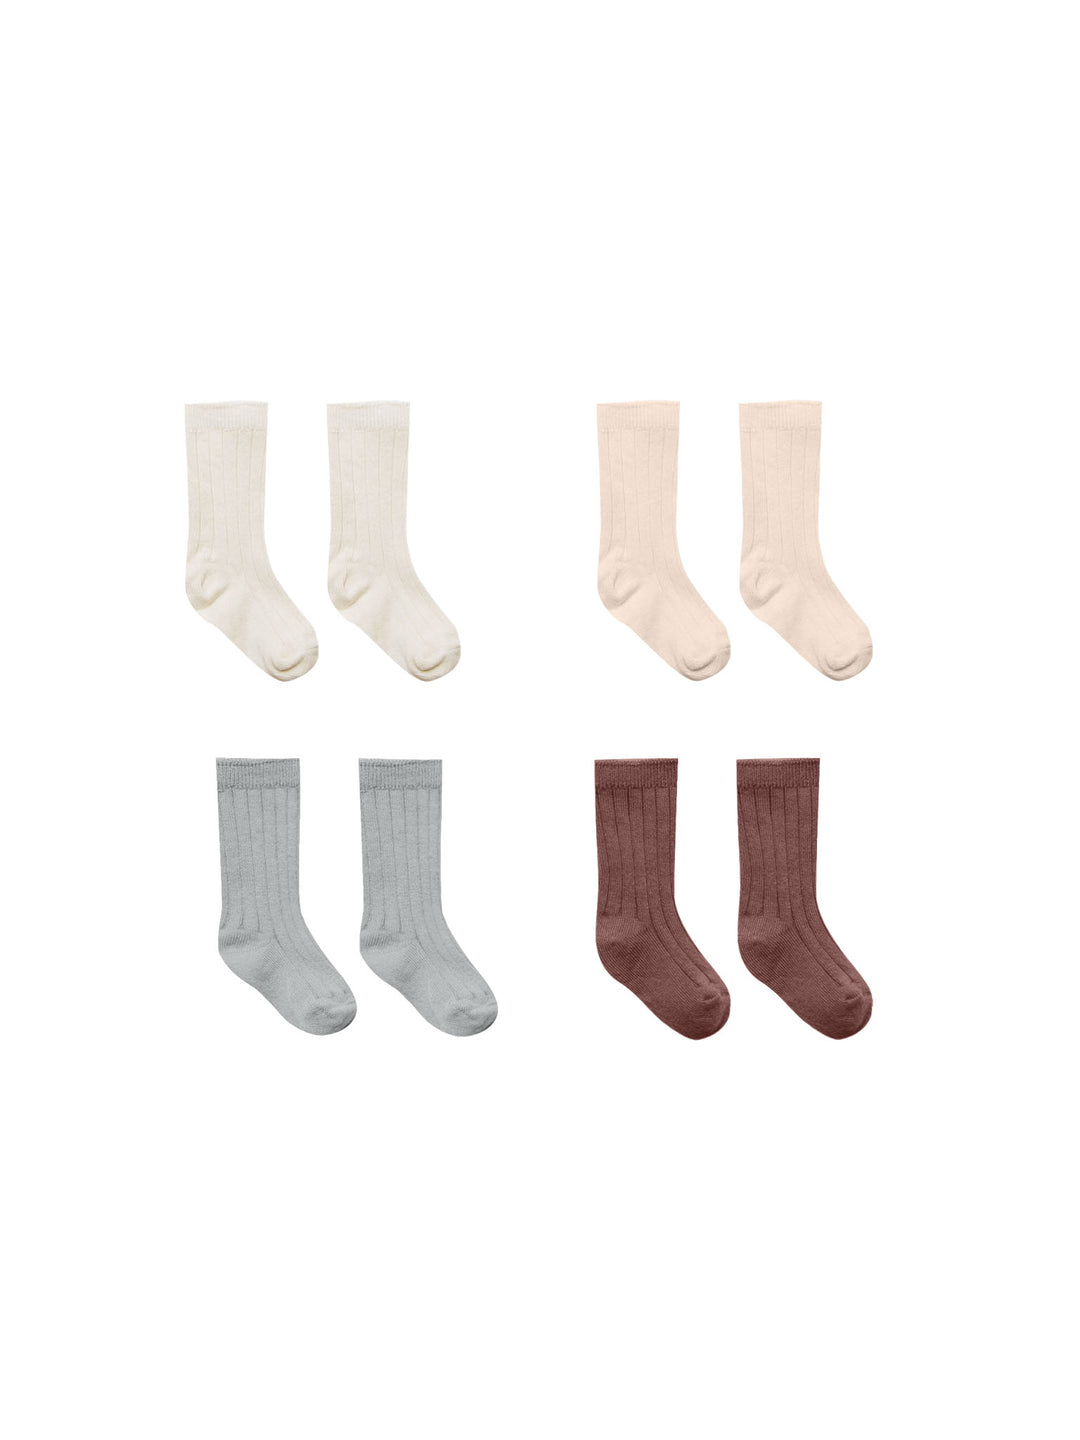 Quincy Mae Socks - Set of 4 (Ivory, Shell, Dusty Blue, Plum)